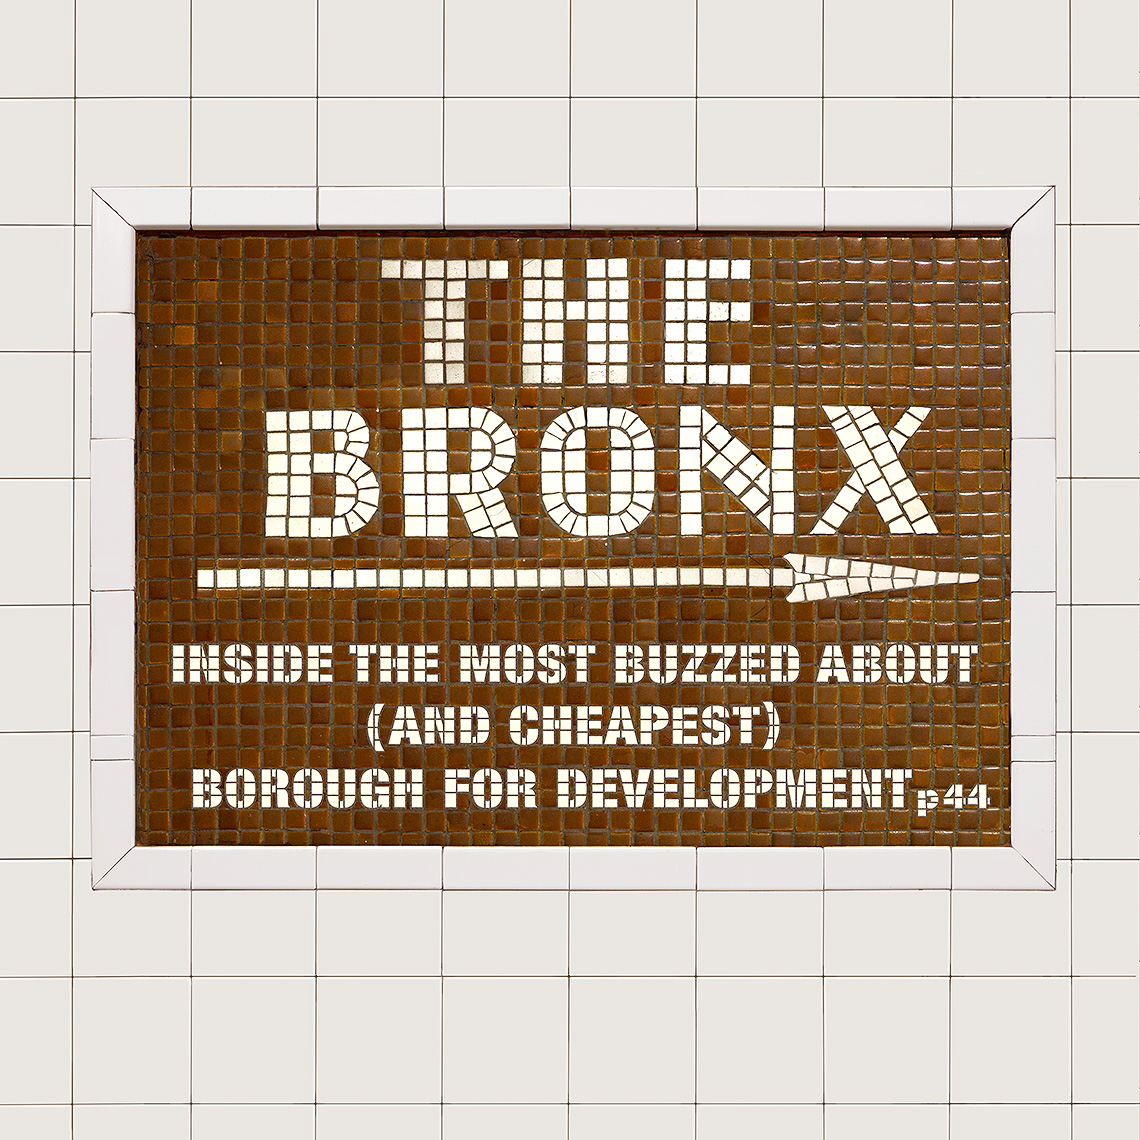 Bronx business subway sign photo-illustration by John Kuczala